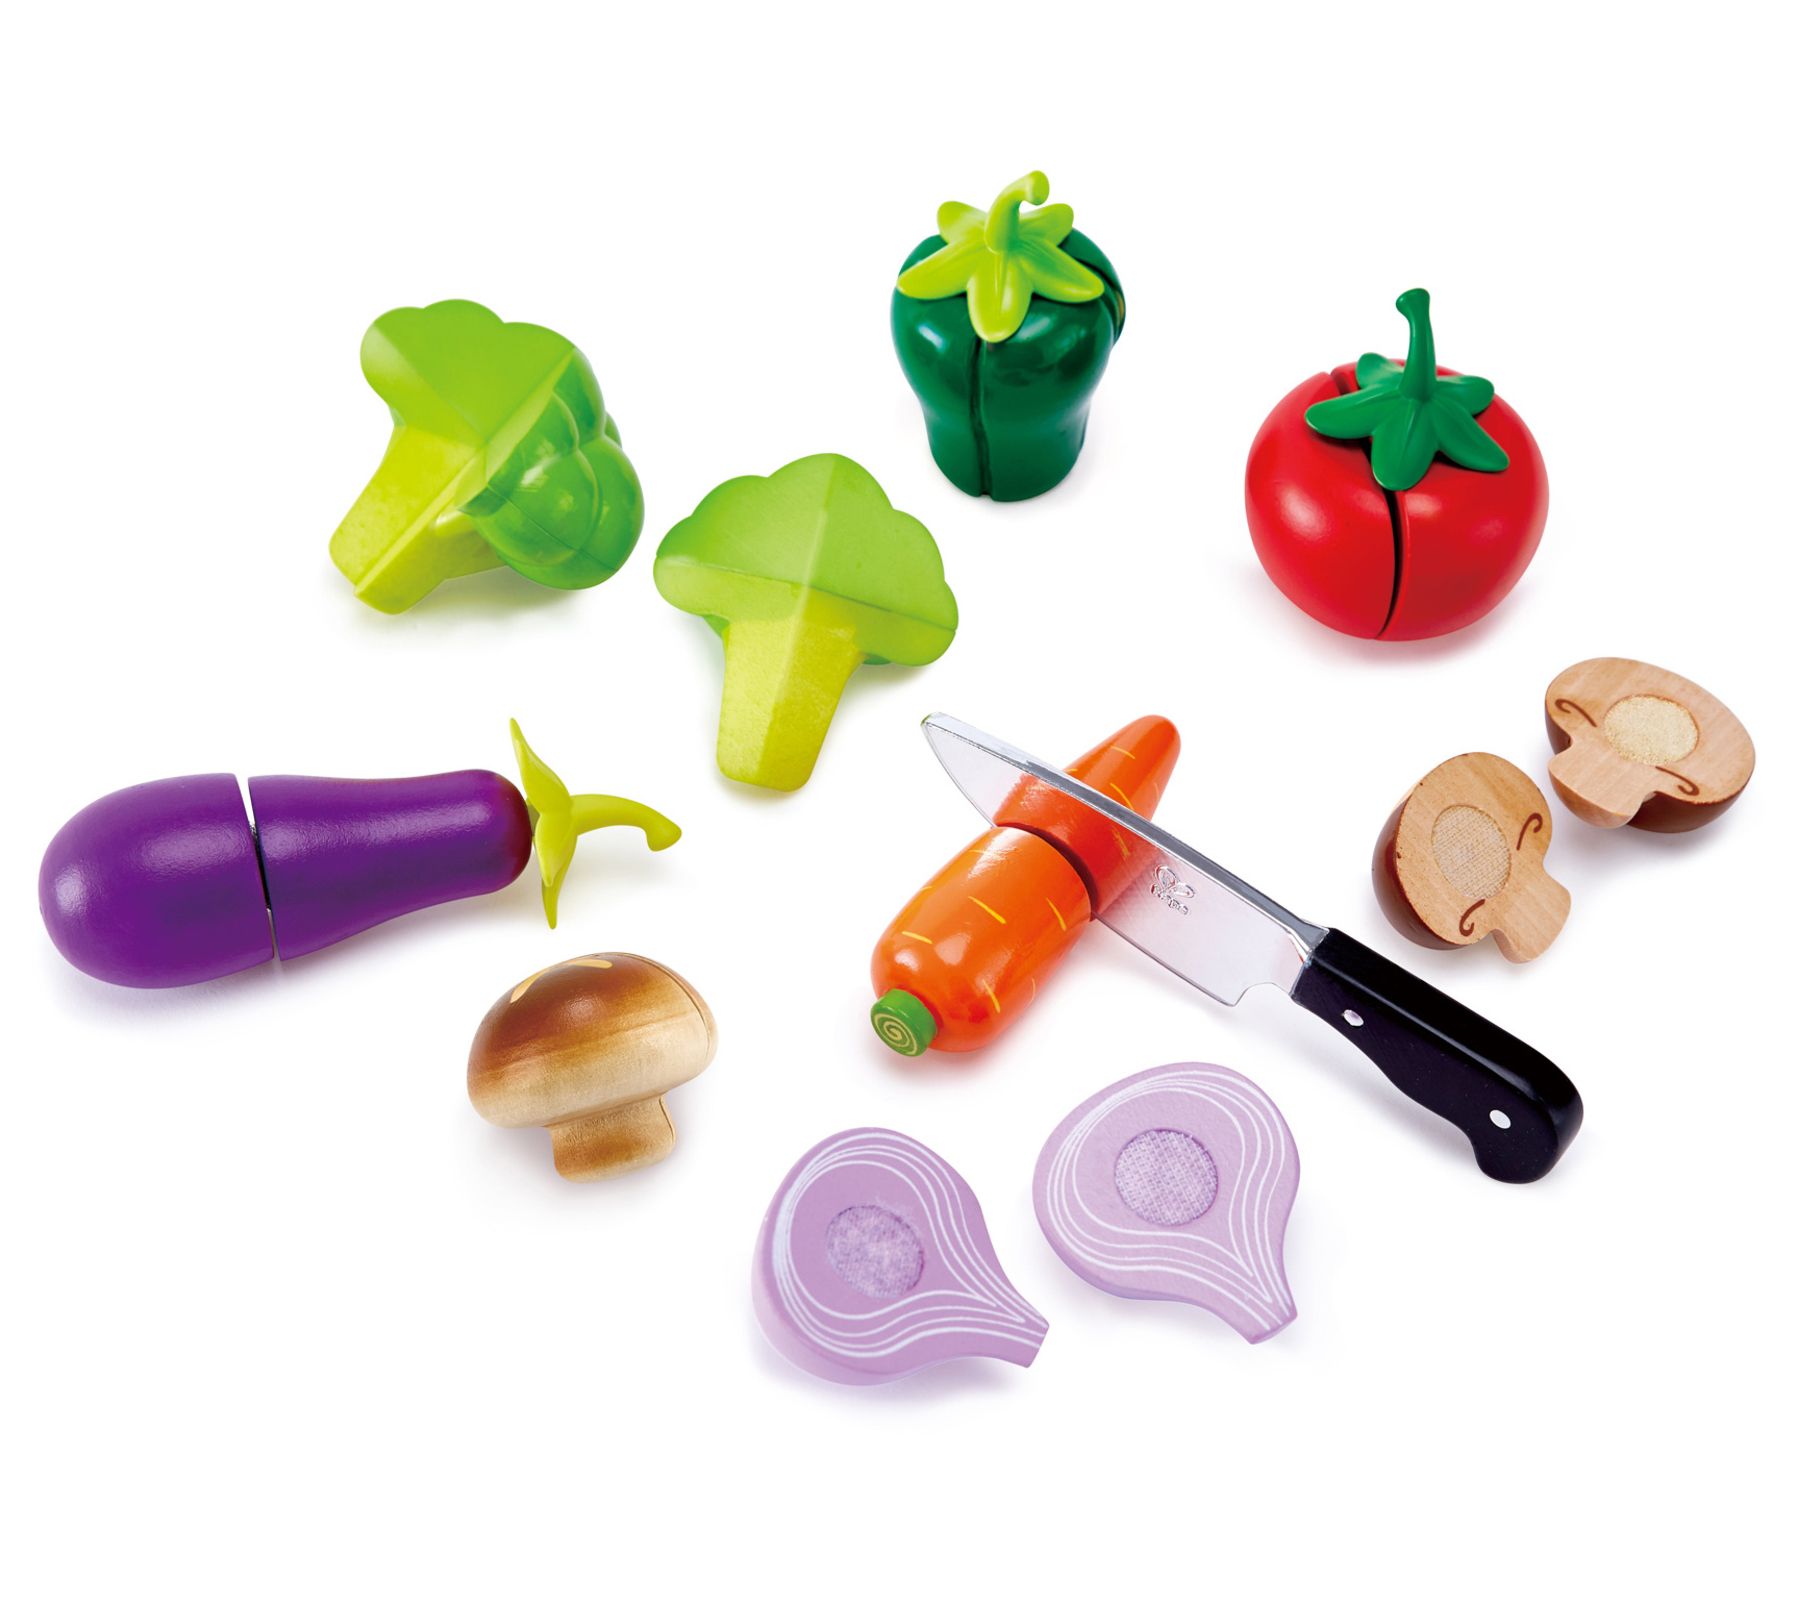 Hape Gourmet Kitchen Starter Set - Hape Toys (Hape International Inc.)